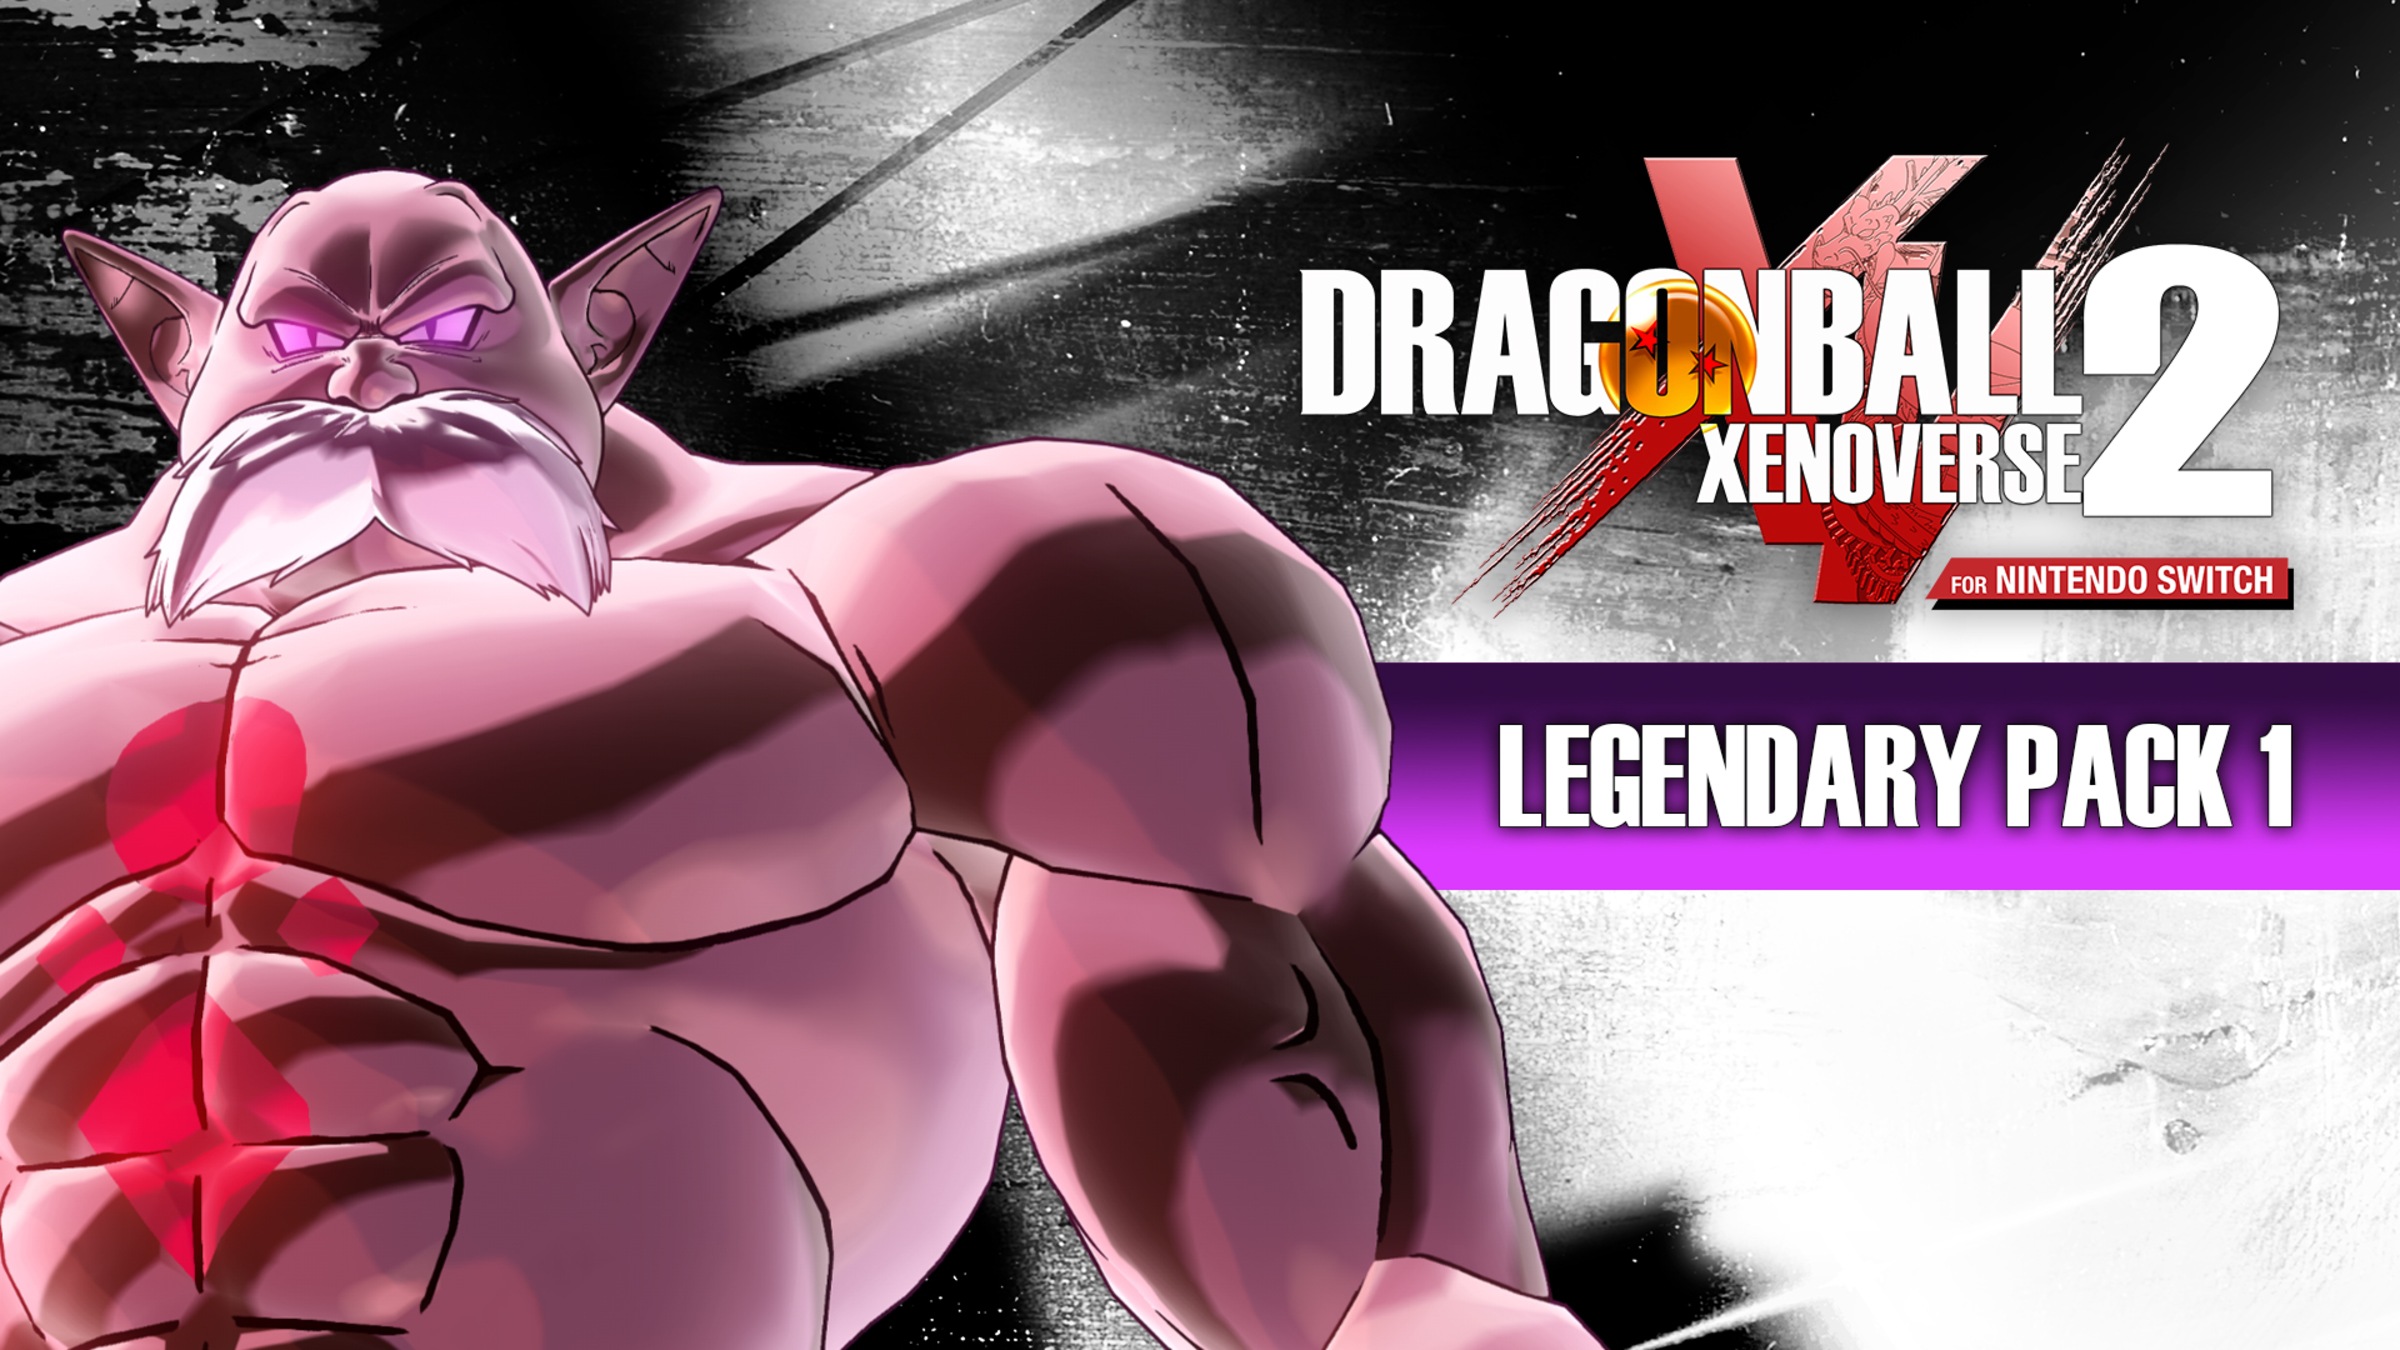 Jogo Dragon Ball: Xenoverse 2 - Xbox One - EletroYou - EletroYou